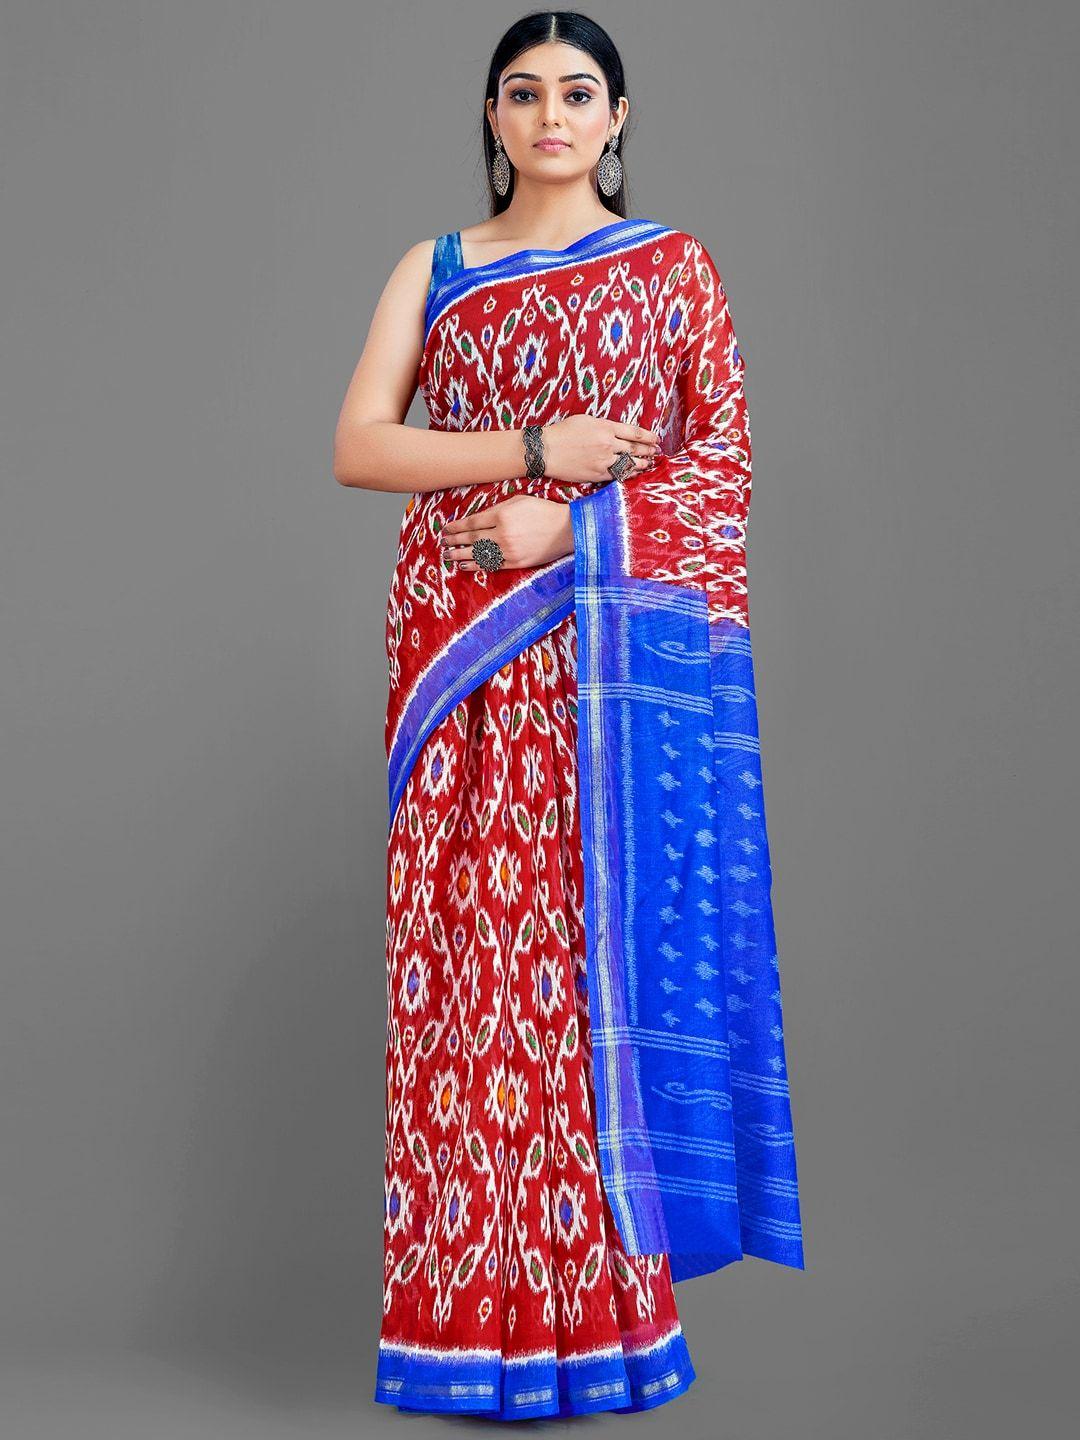 hritika red and blue ethnic geometric printed ikat saree